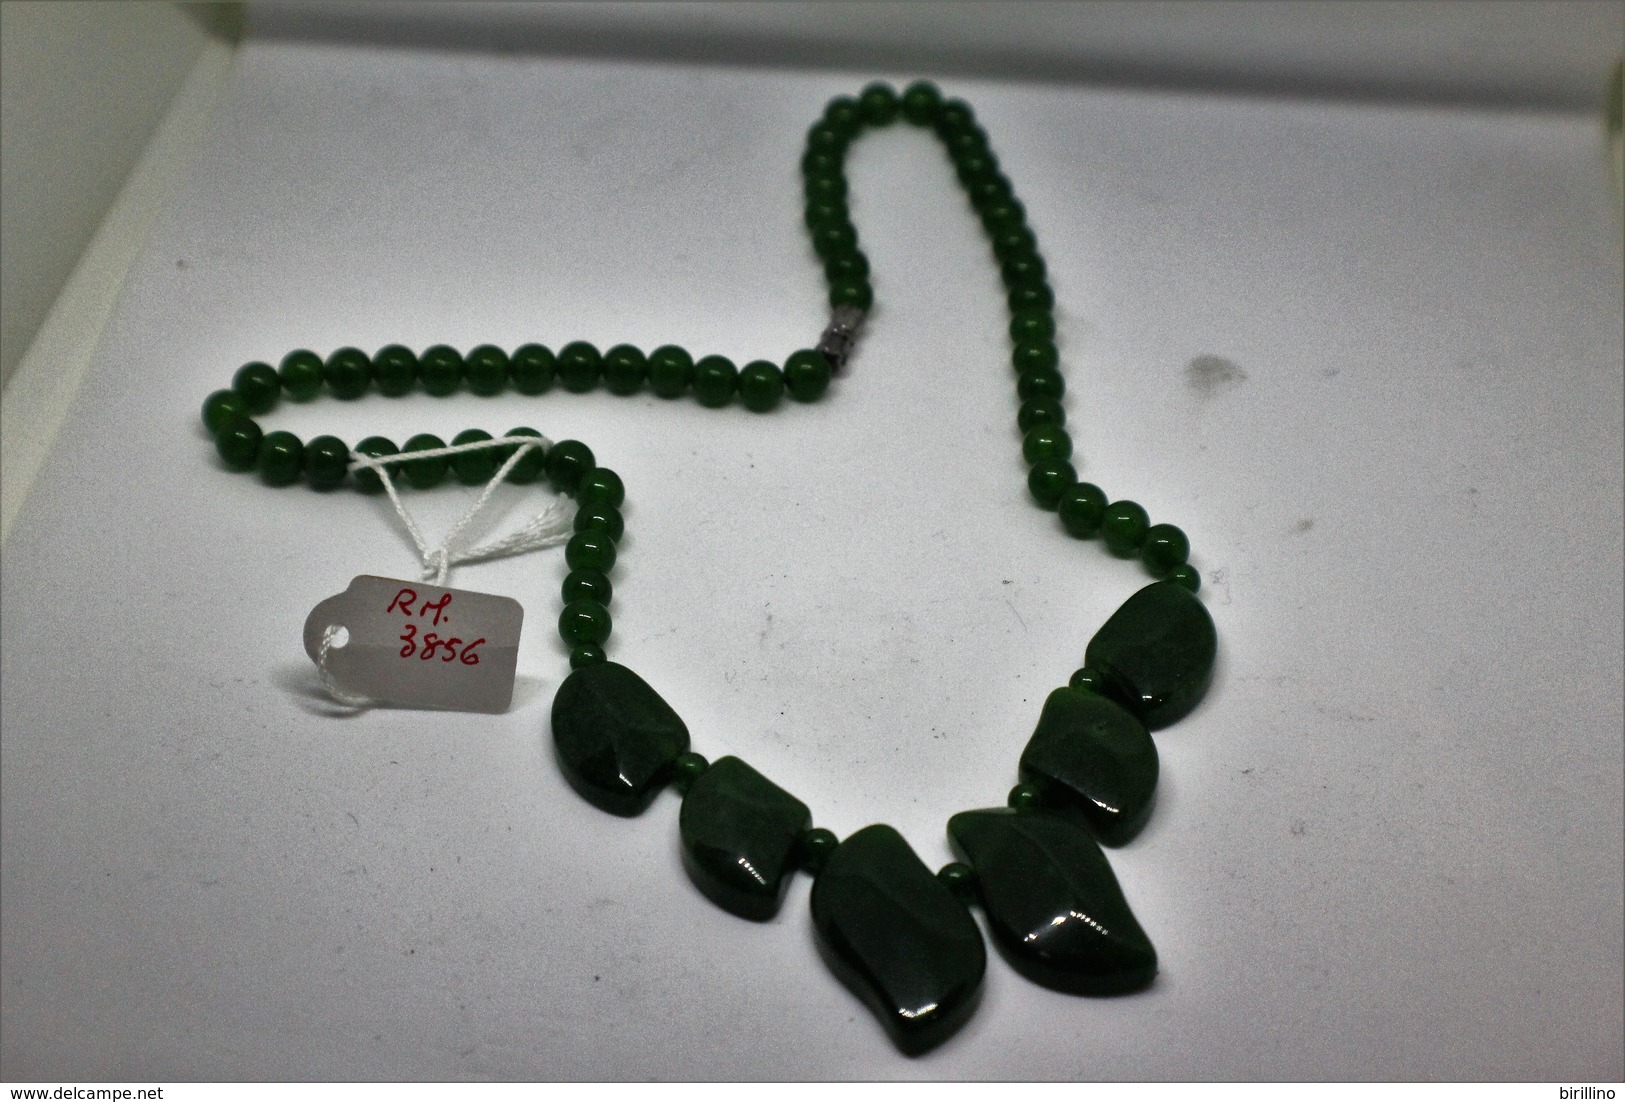 3856 - Collana Di Giada Naturale (serpentino New Jade) Lucidata A Mano. Peso Totale 44 Gr. - Art Oriental